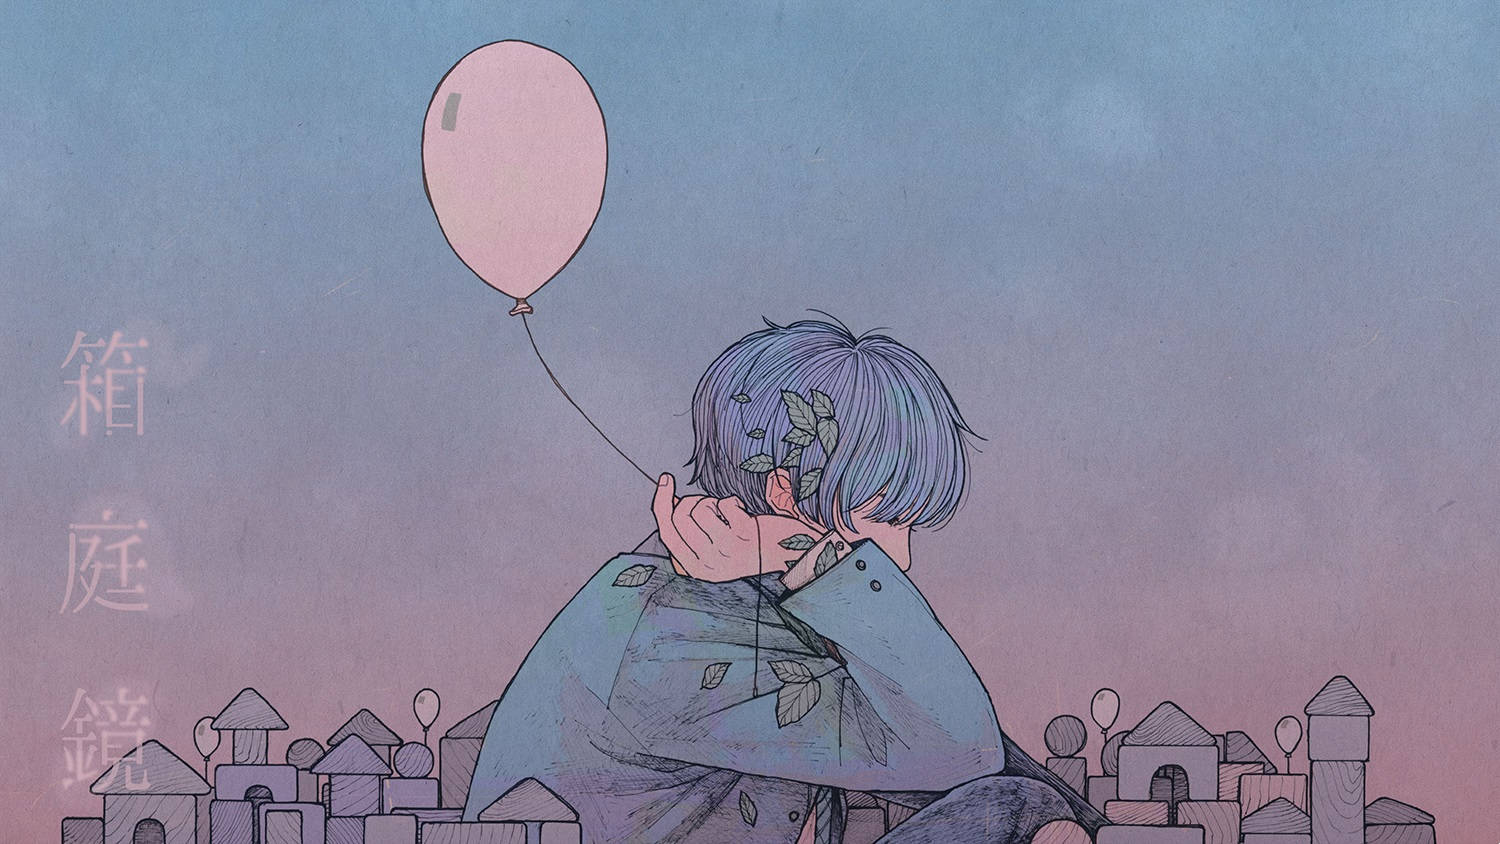 Aesthetic Anime Desktop Boy Holding Balloon Wallpaper